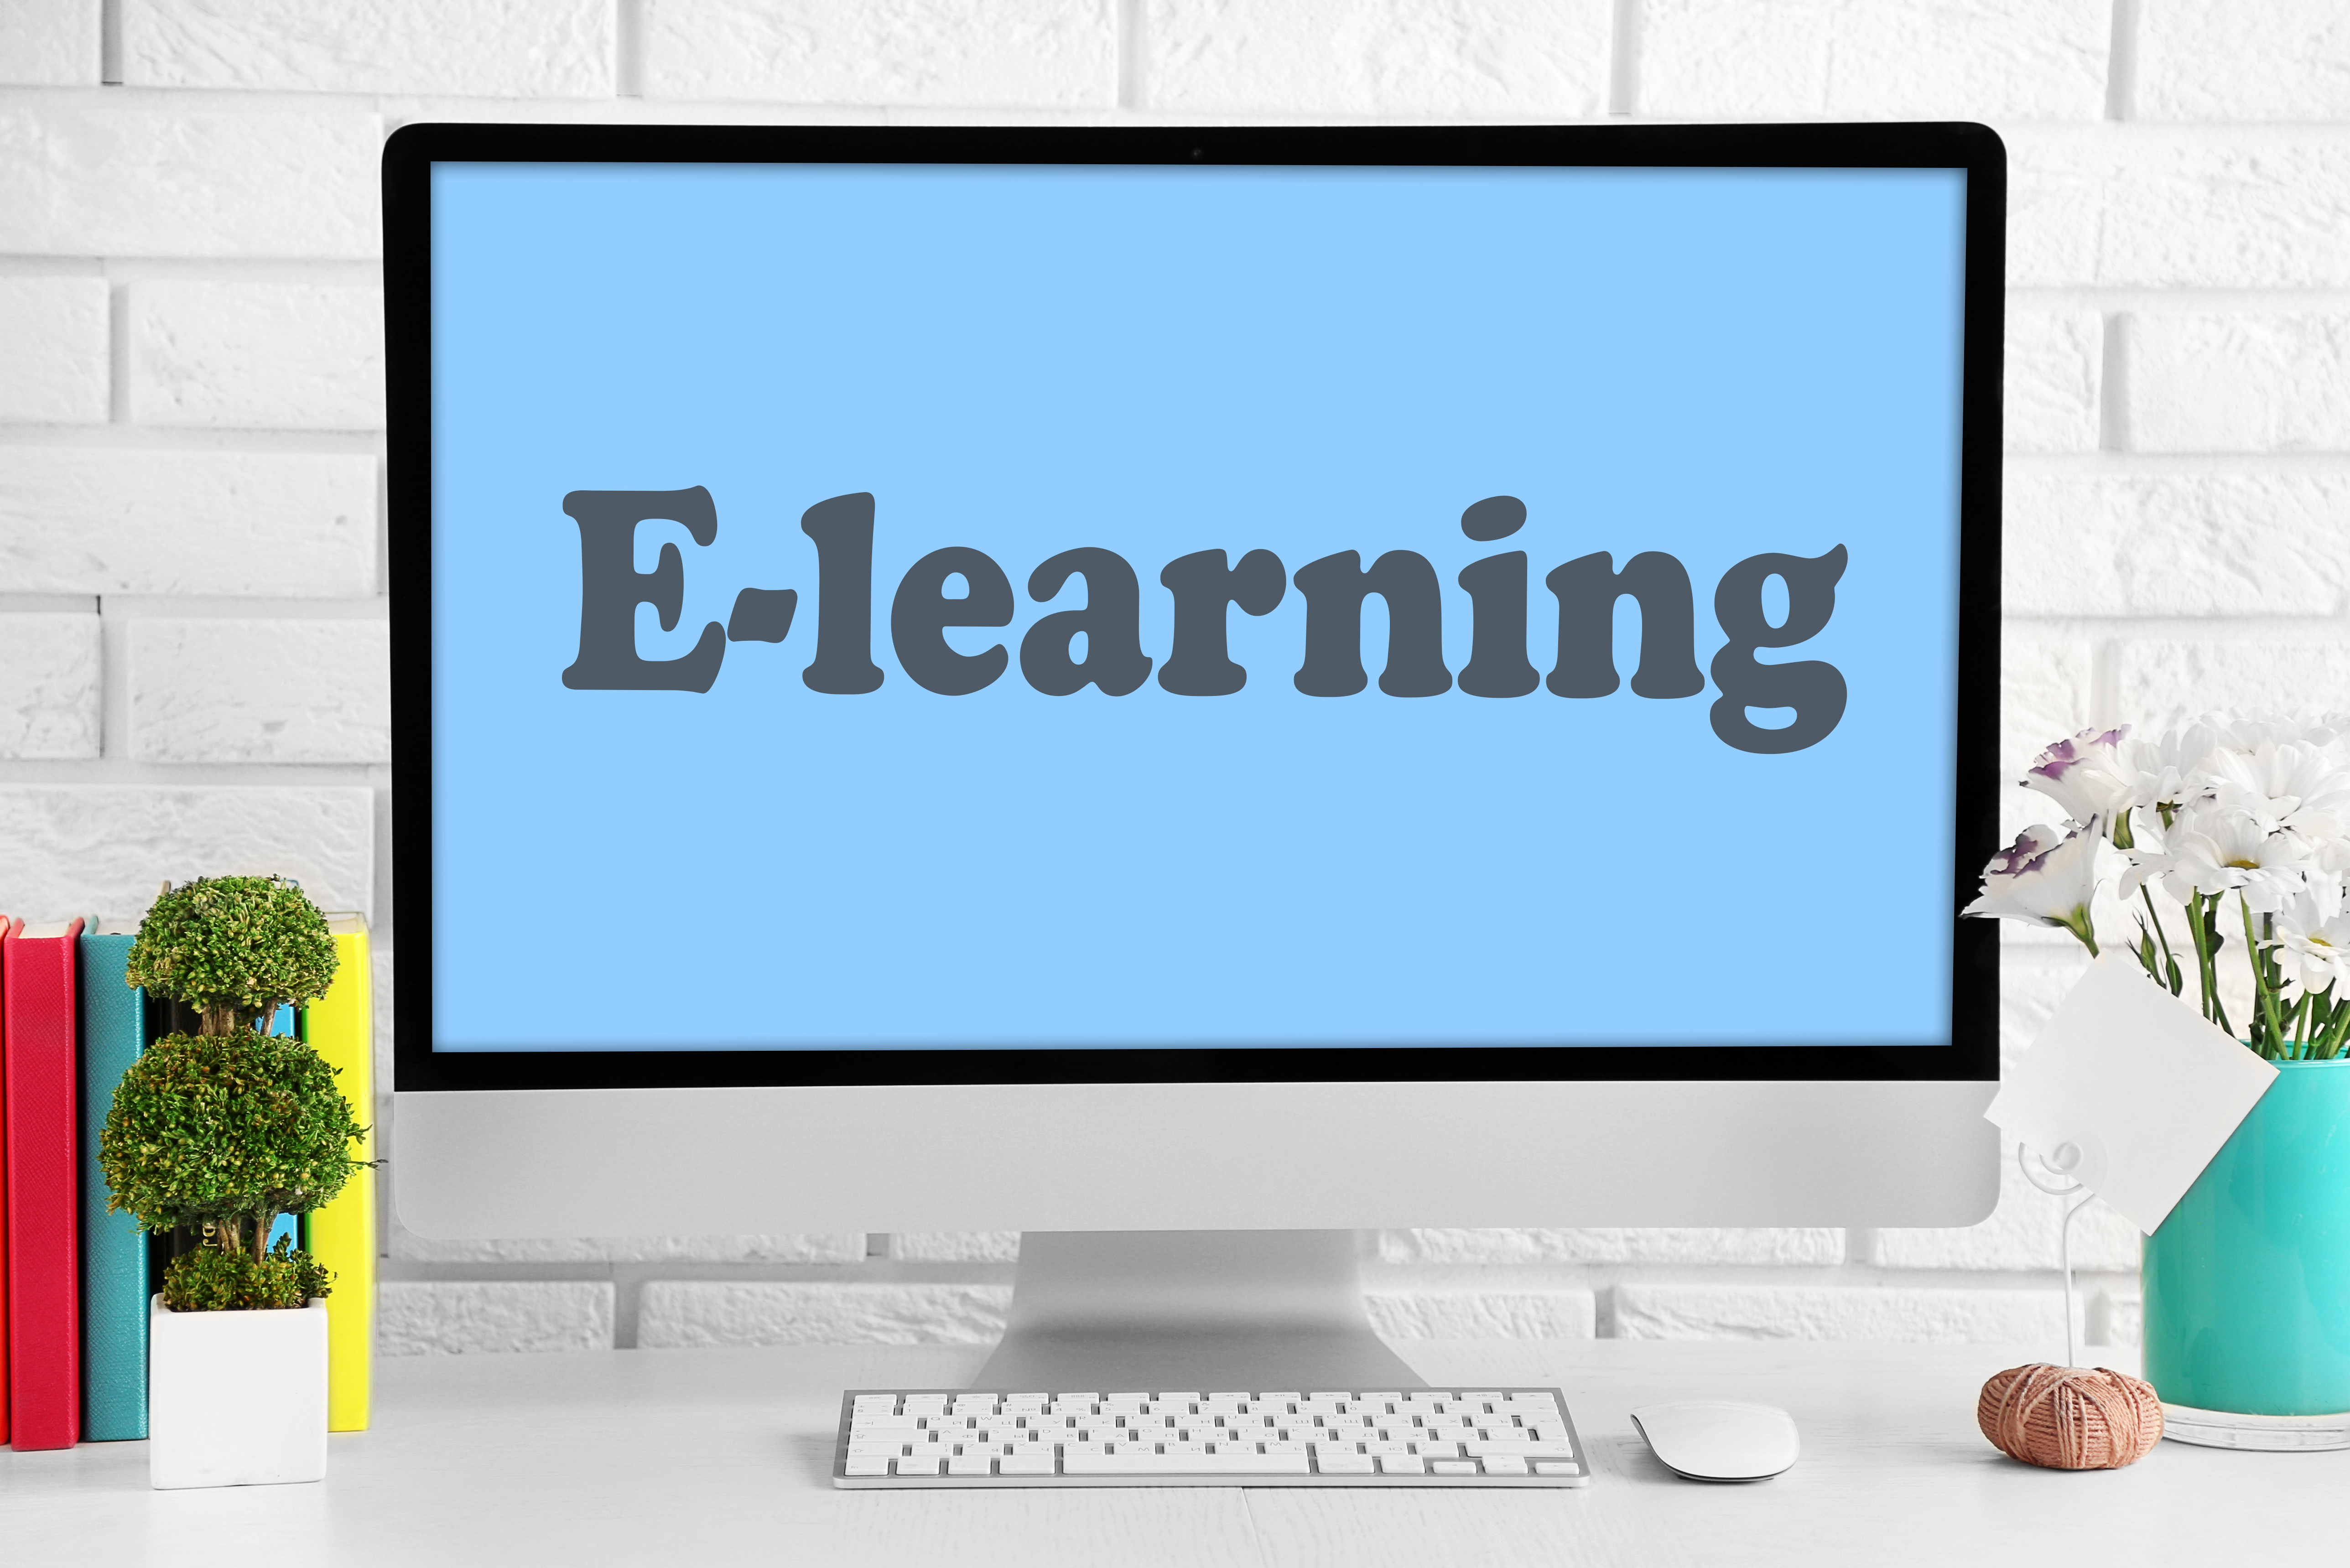 Customer Communications E-Learning Course by Jeff Mowatt